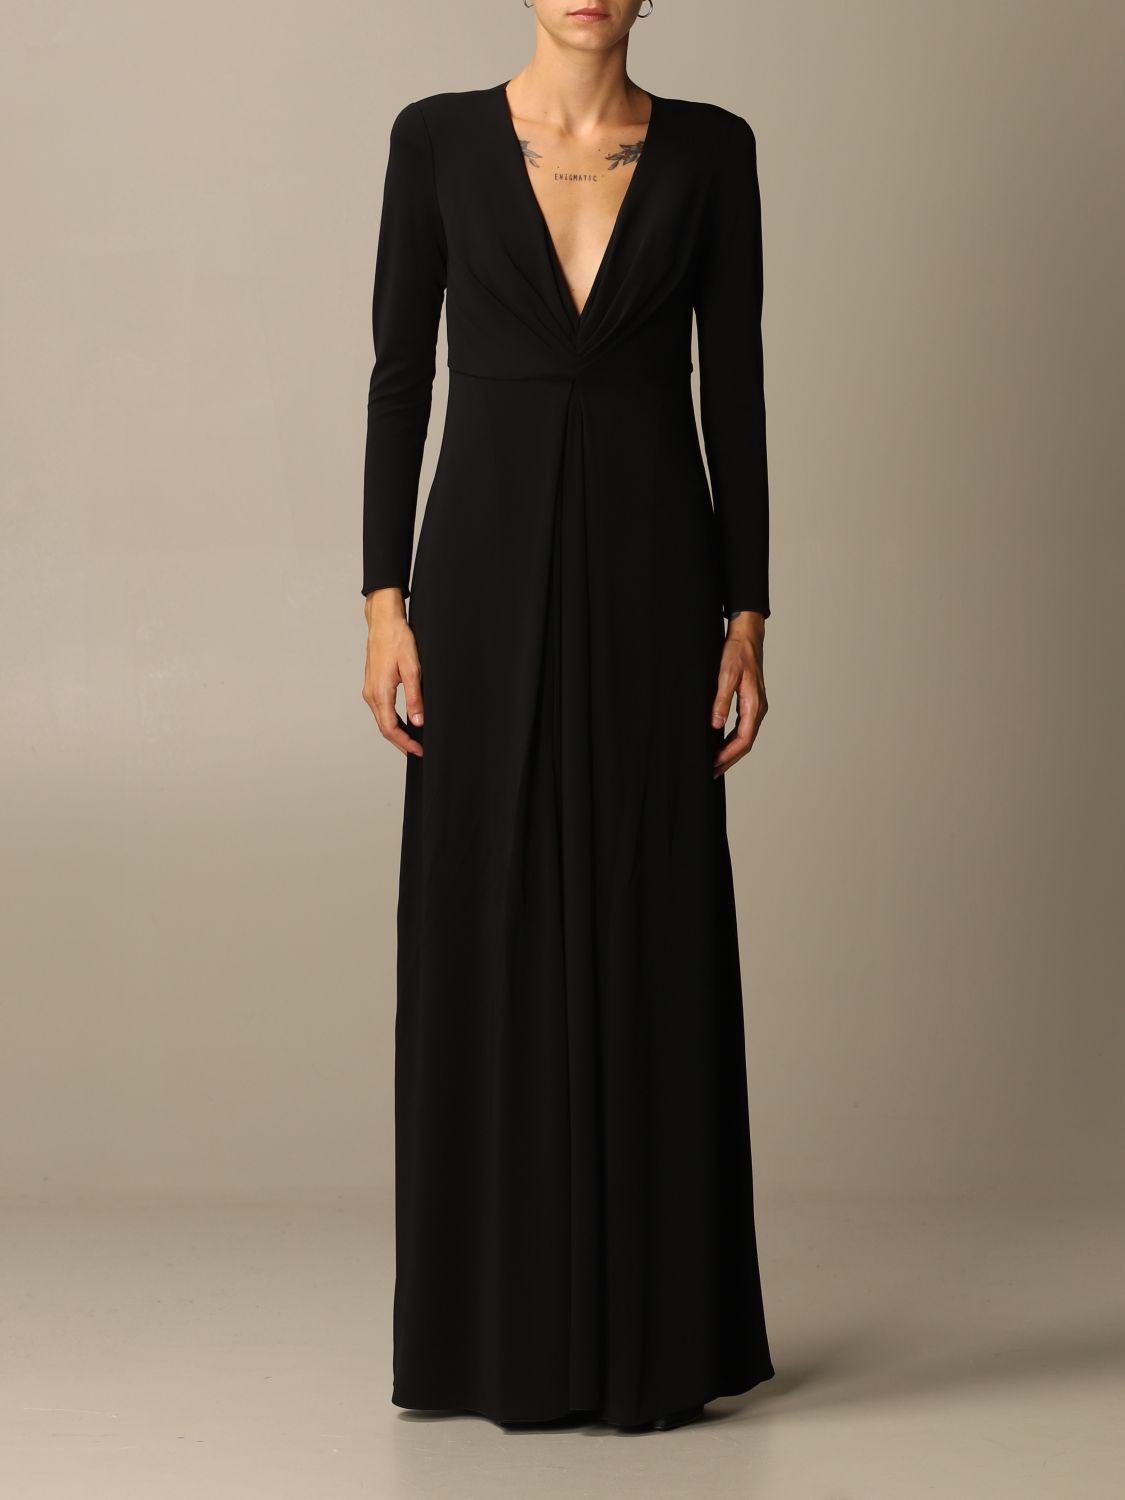 emporio armani black dress